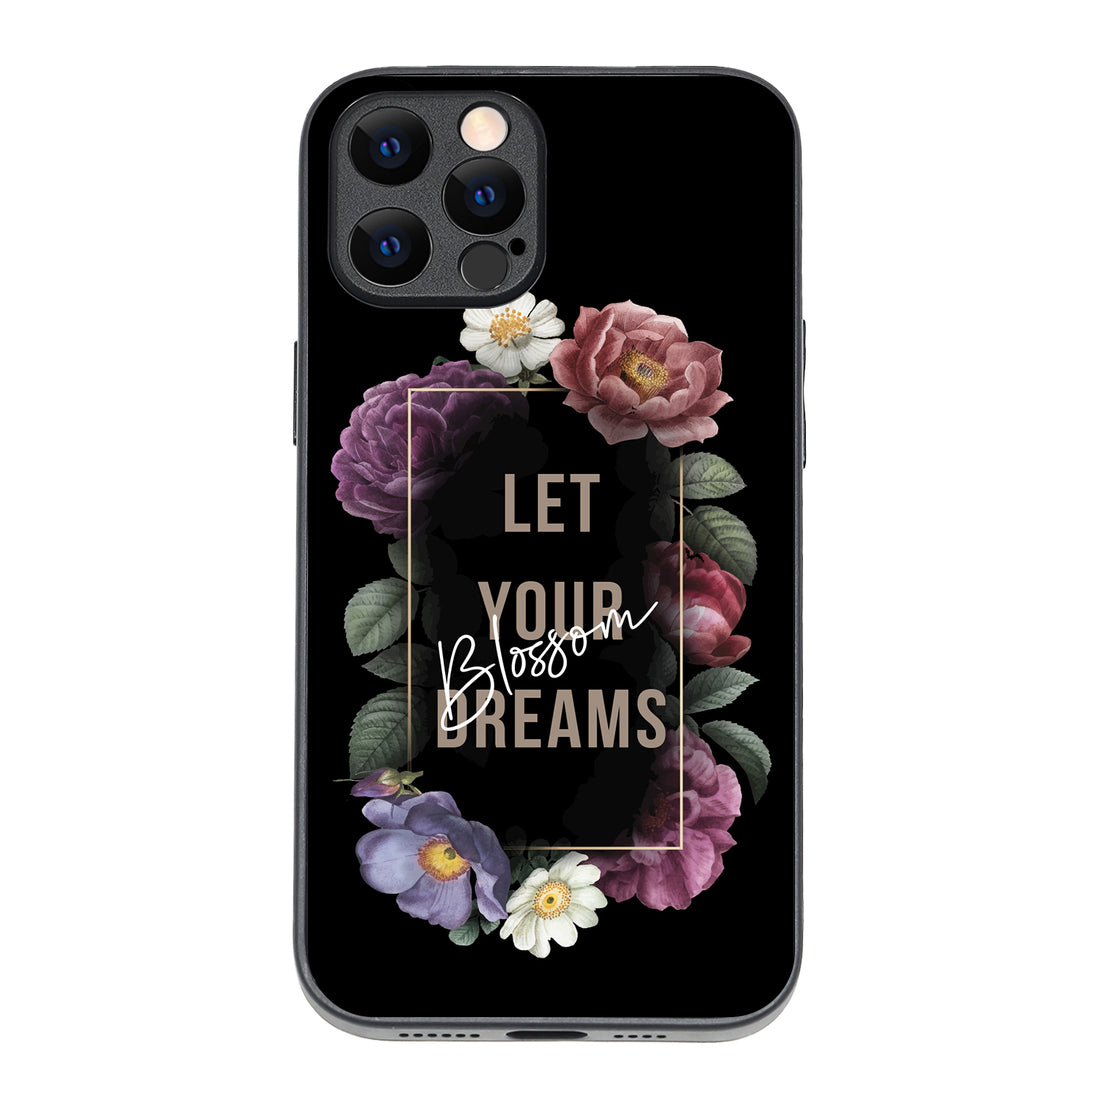 Blossom Dreams Floral iPhone 12 Pro Max Case